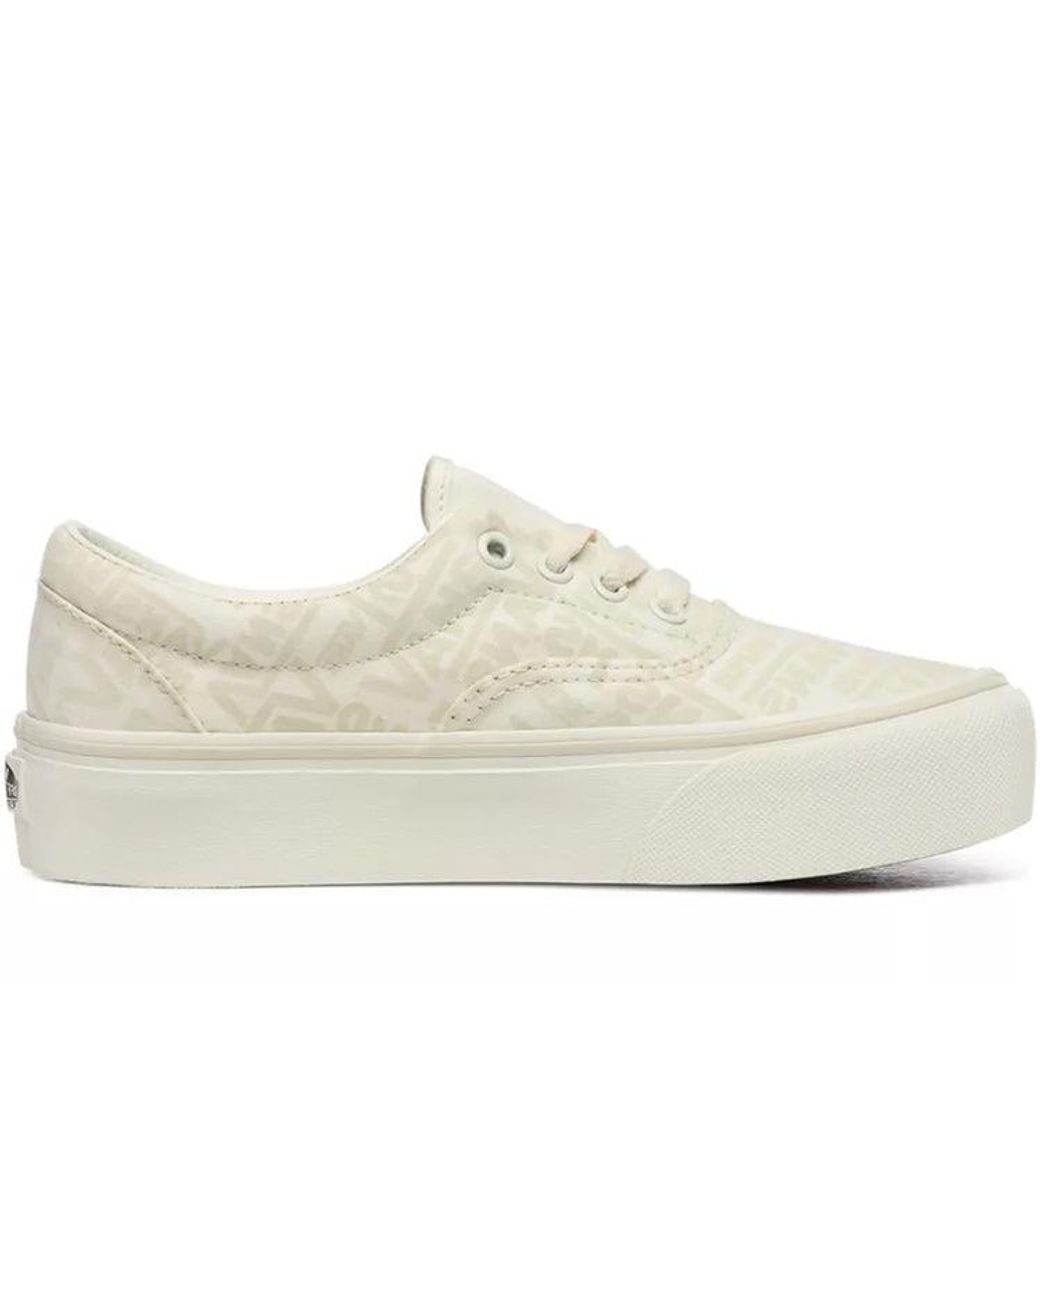 Vans 66 Era Platform Retro Casual Skateboarding Shoes Creamy White for Men  | Lyst